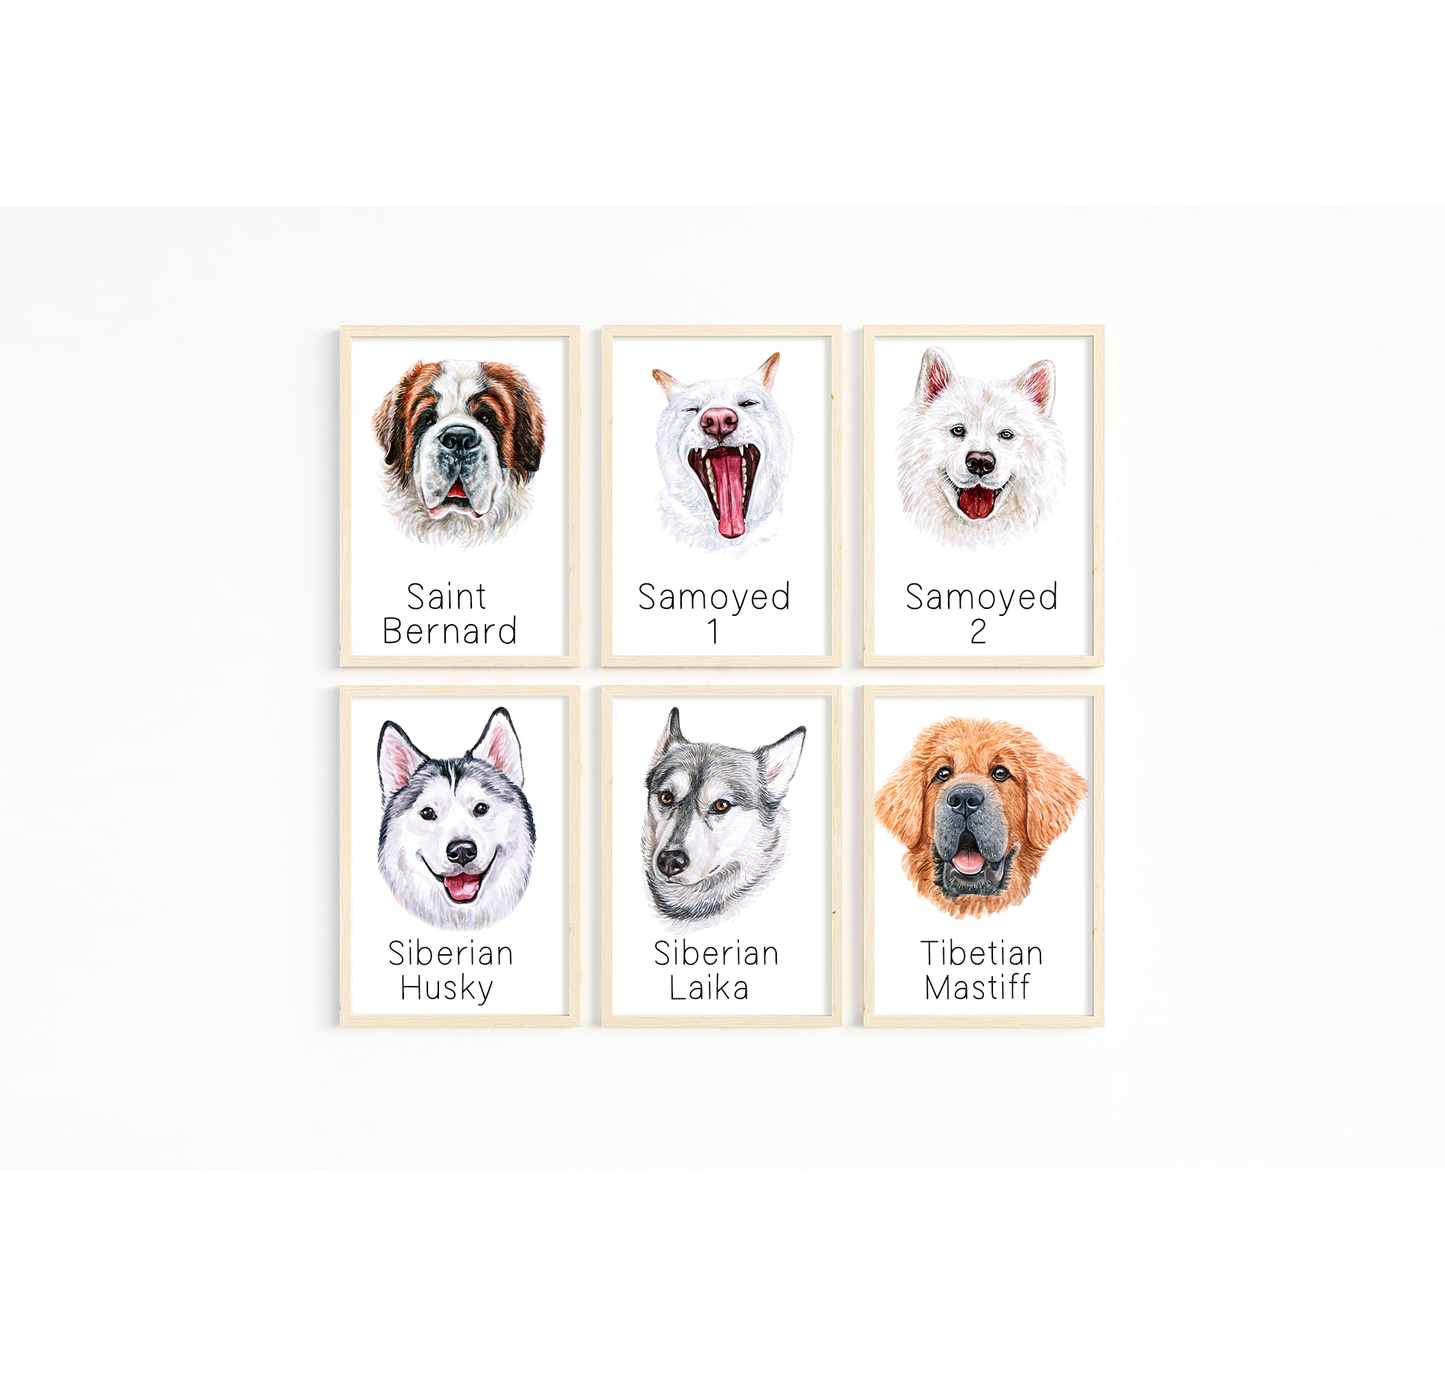 Working dog breed art - portraits of Rottweiler, Dobermann, Great Dane or St Bernard dog with custom funny message | A4 | A5 | Greeting card